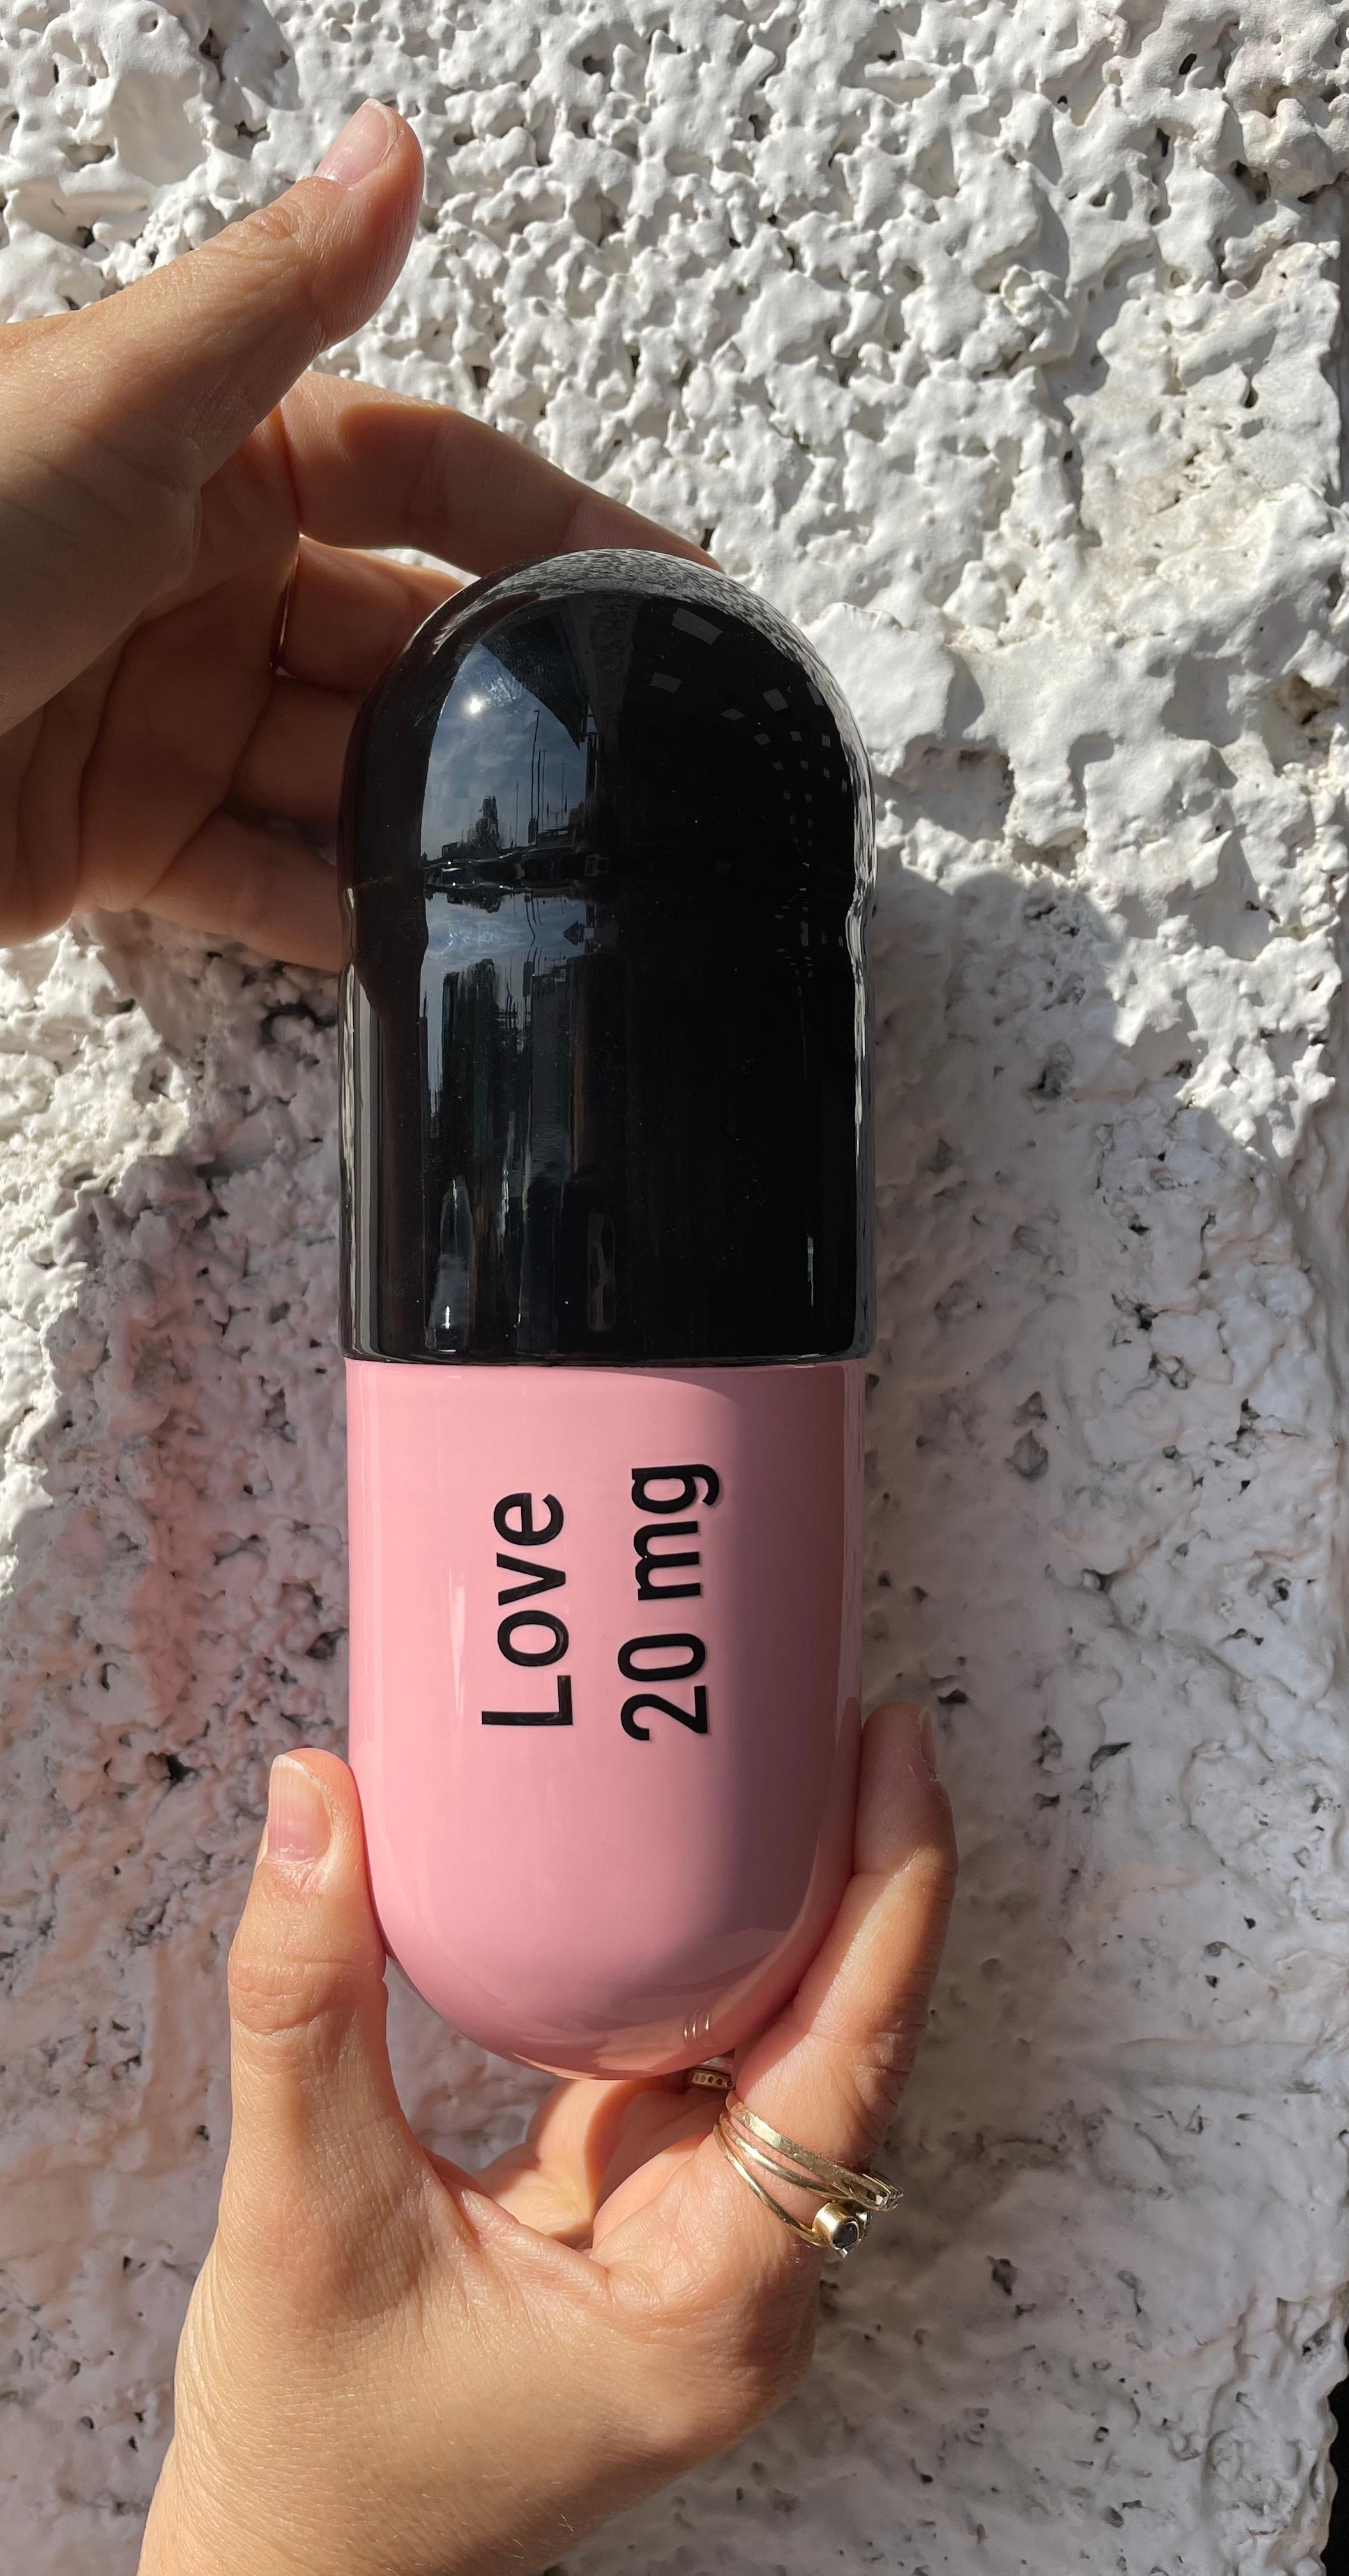 20 ml Love pill (black and pink) - figurative pop sculpture 1